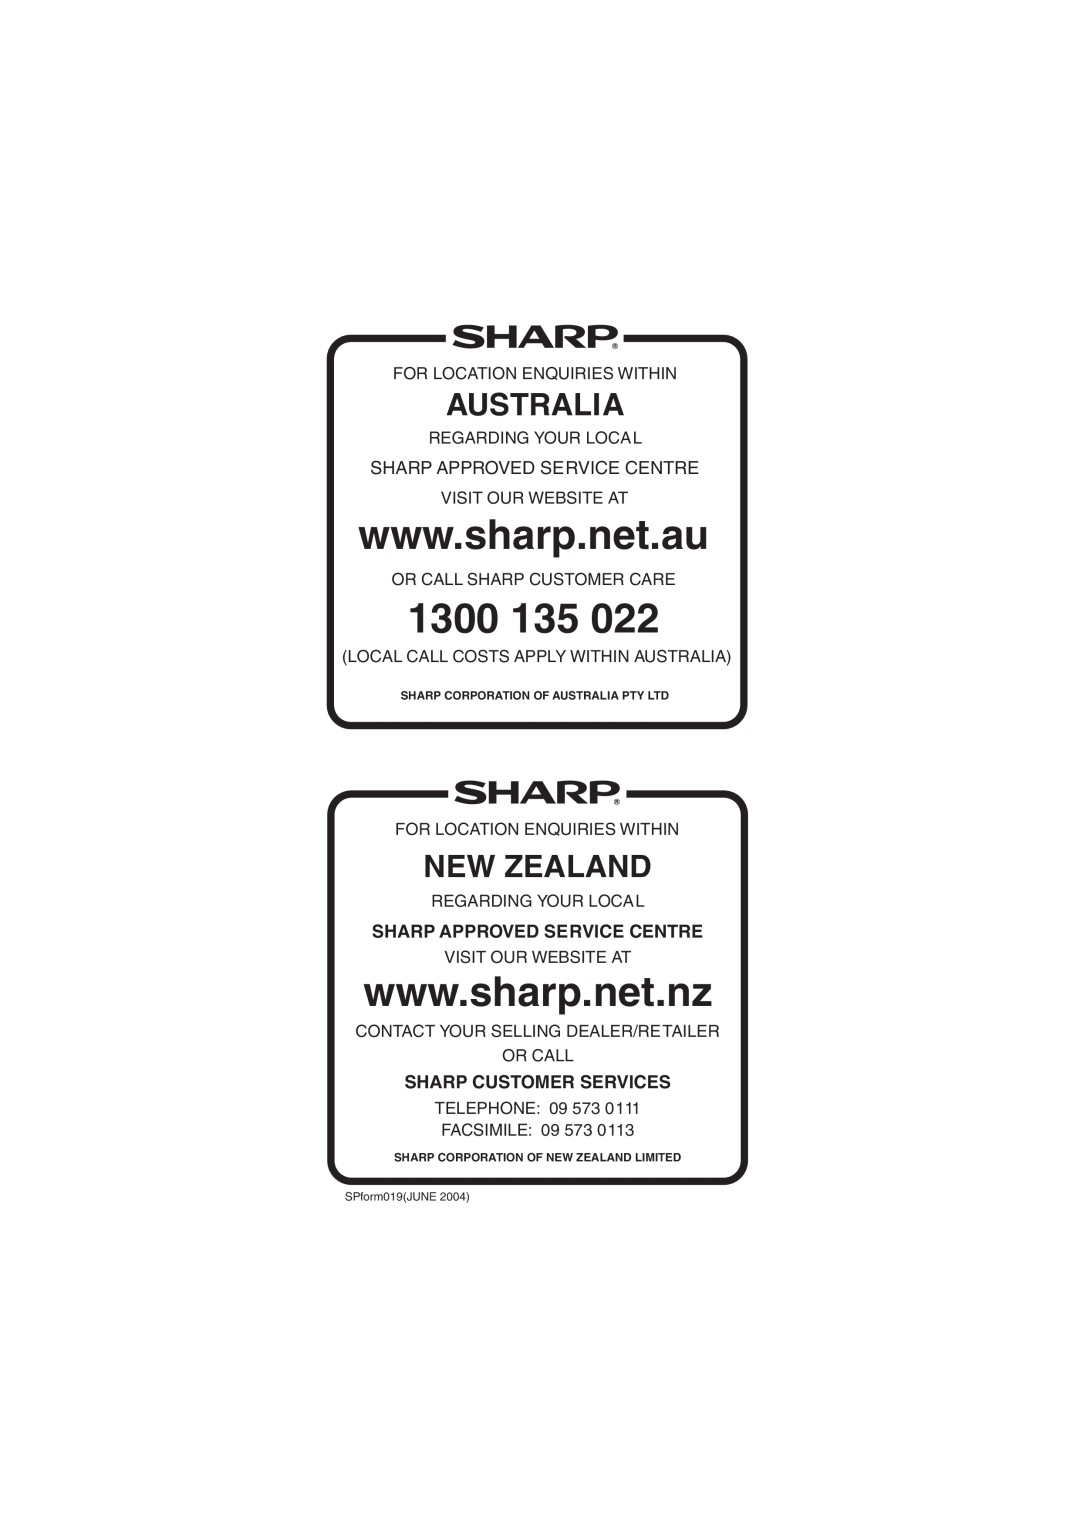 Sharp R-890N operation manual Australia, New Zealand, Sharp Approved Service Centre, 1300, Sharp Customer Services 